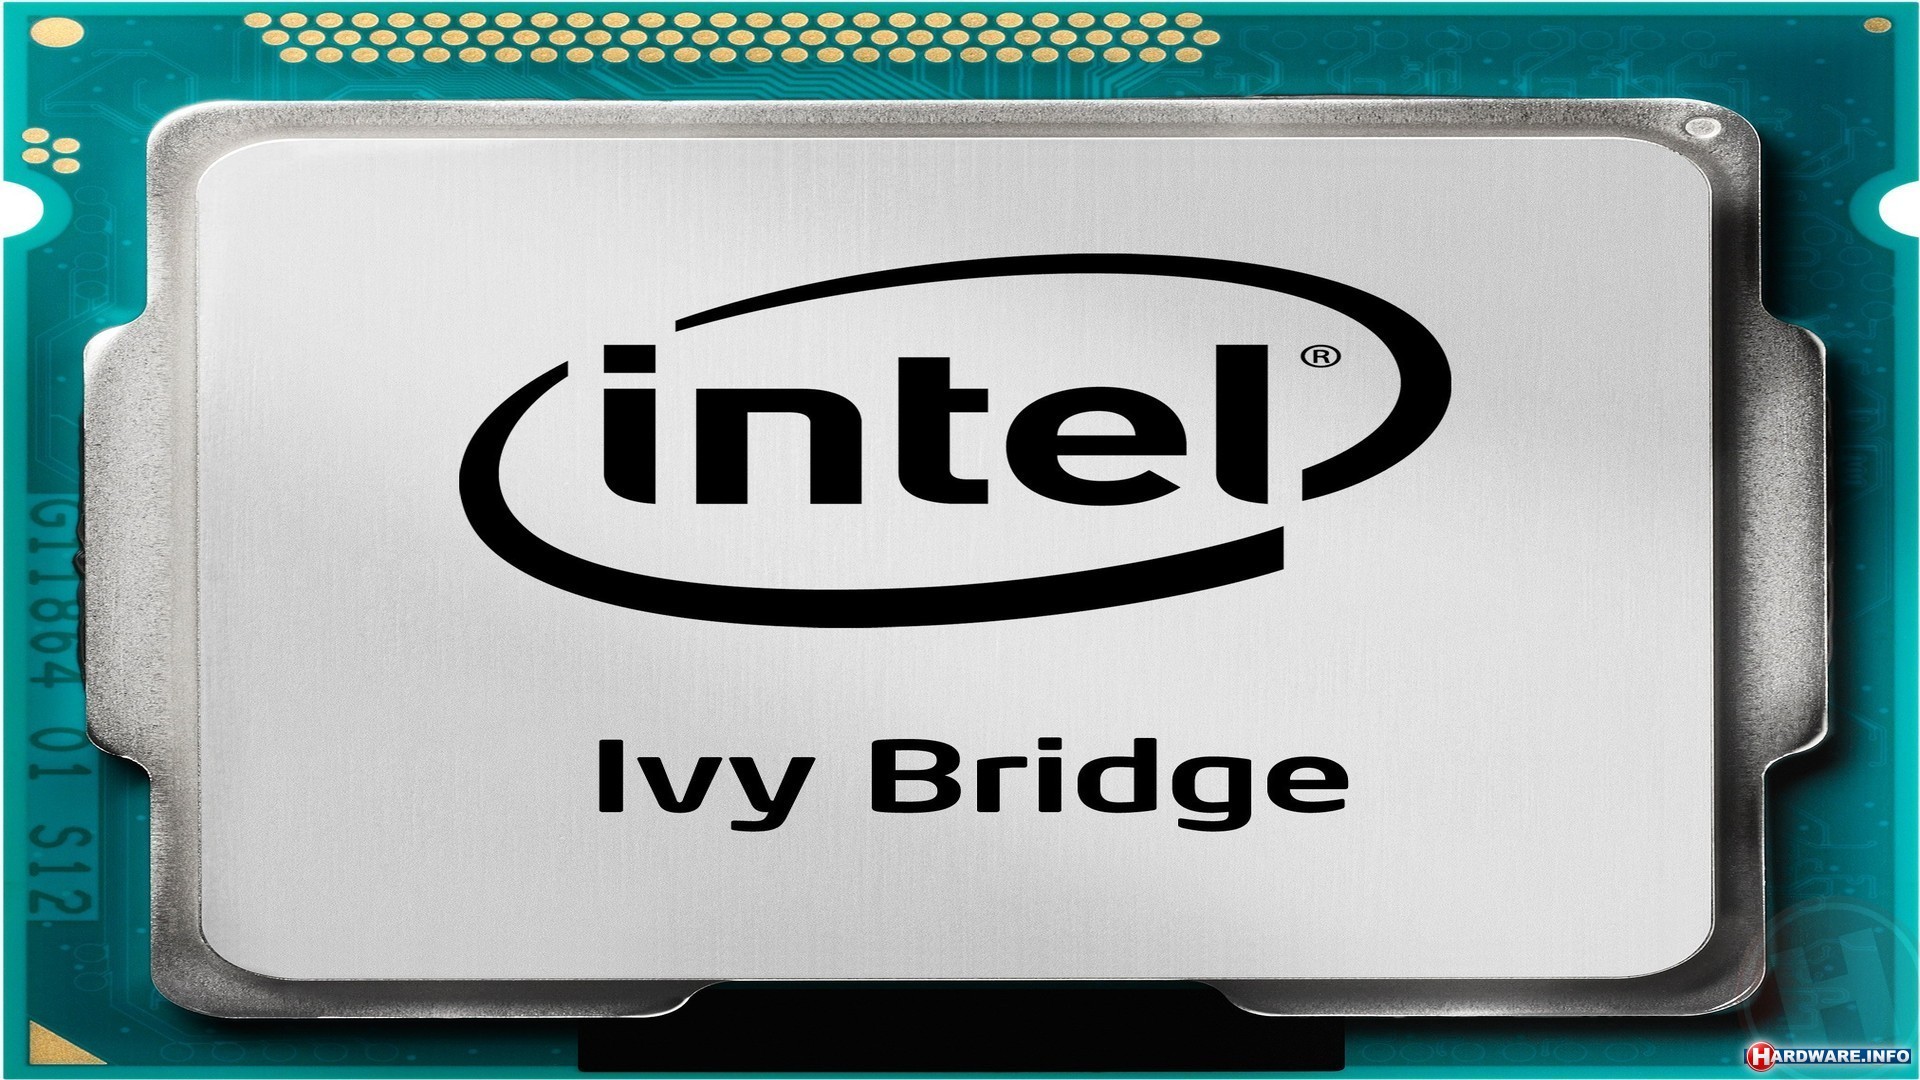 Intel 3 pro. Значок Intel Core i5. Процессоры Intel логотип. Интел картинки. Чипов Intel Ivy Bridge.